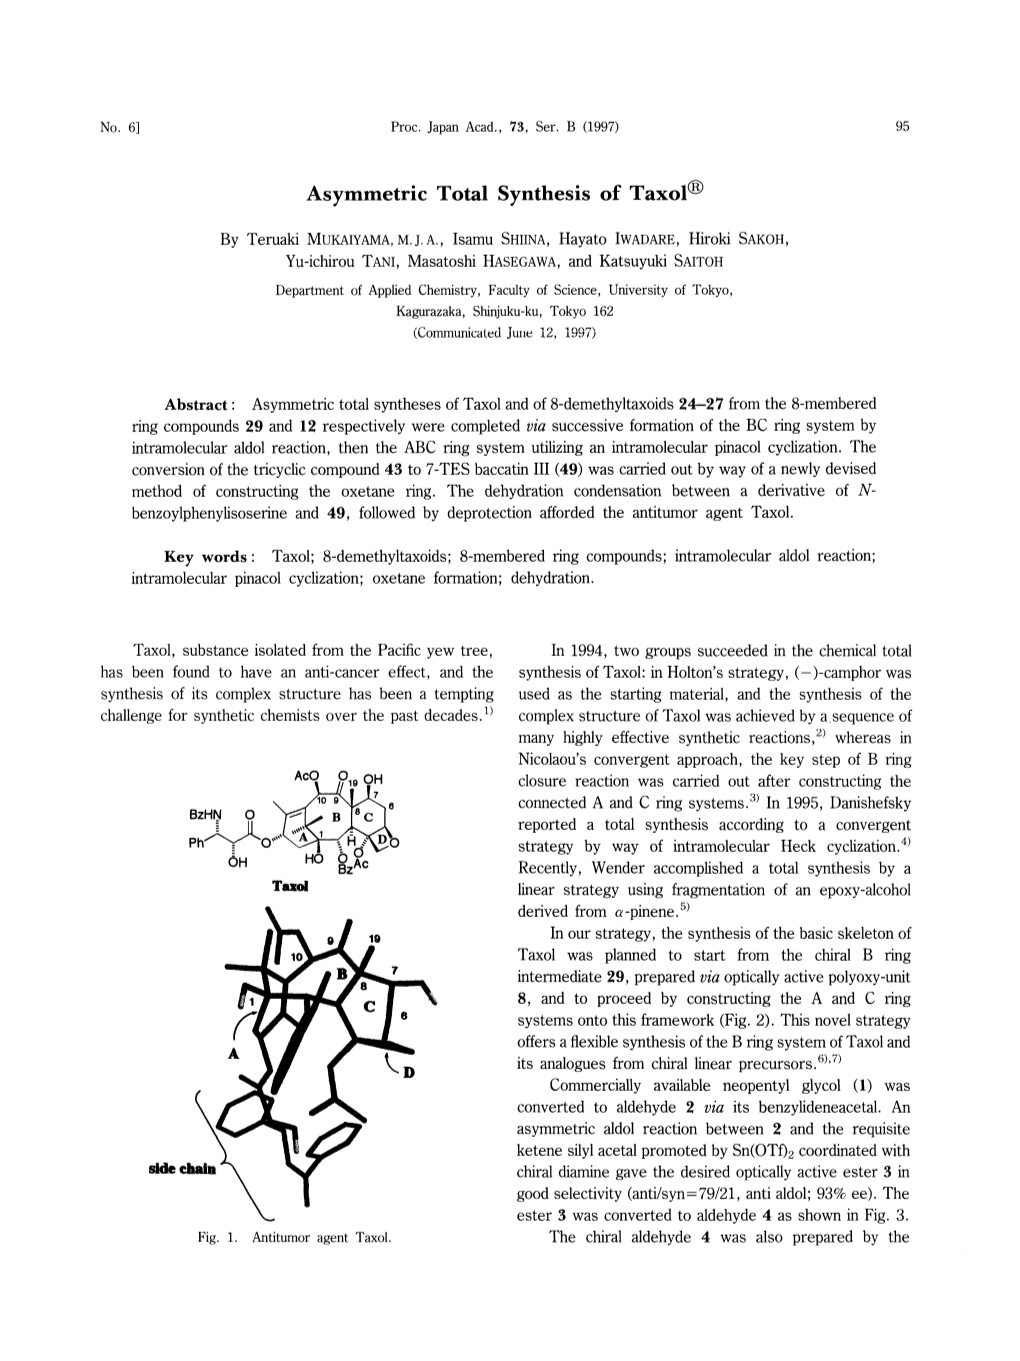 Asymmetric Total Synthesis of Taxol® by Teruaki MUKAIYAMA, M. J. A